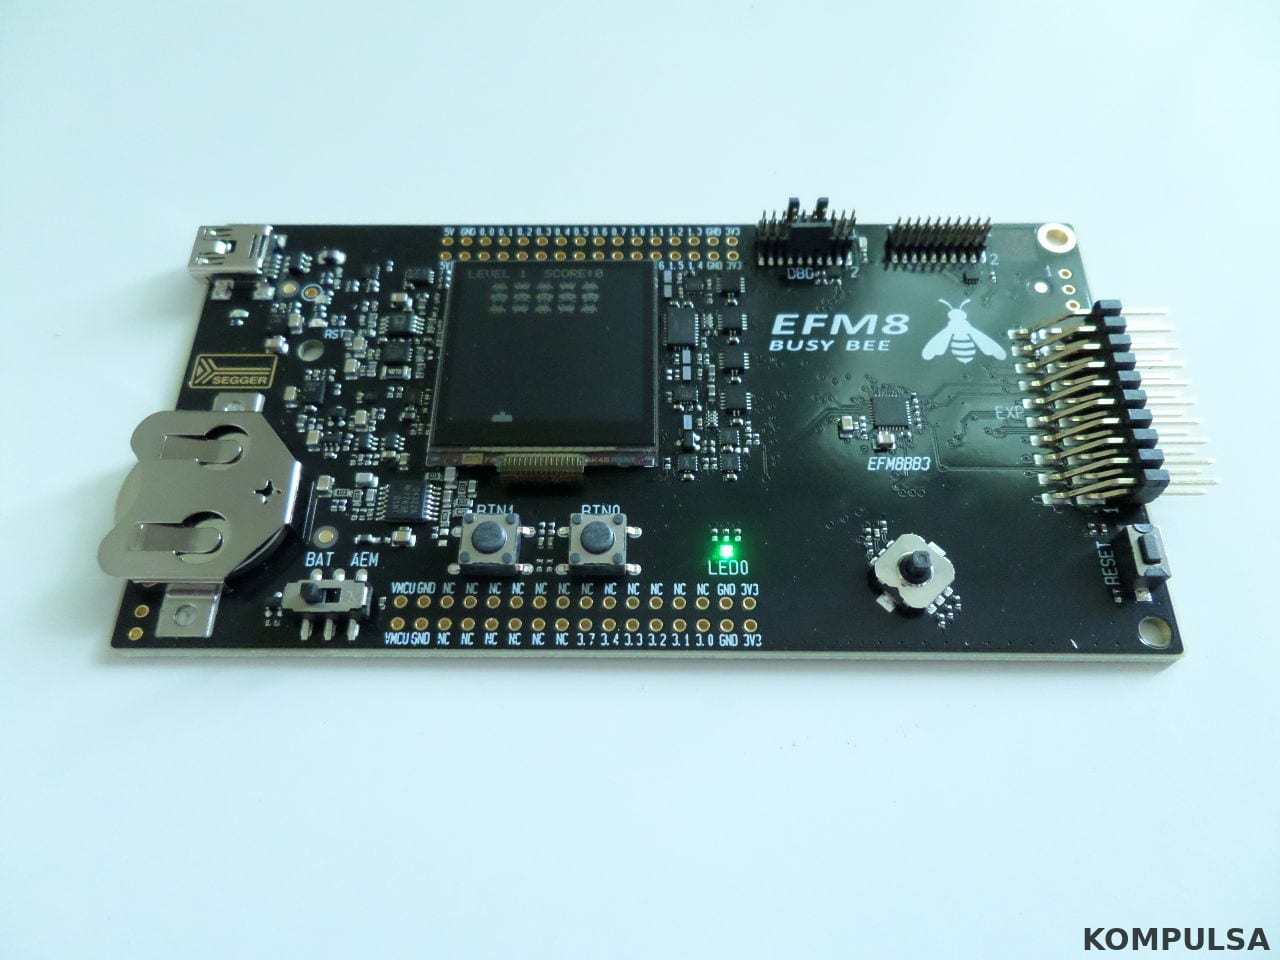 Silicon Labs EFM8 Busy Bee 3 Development Kit (SLSTK2022A).